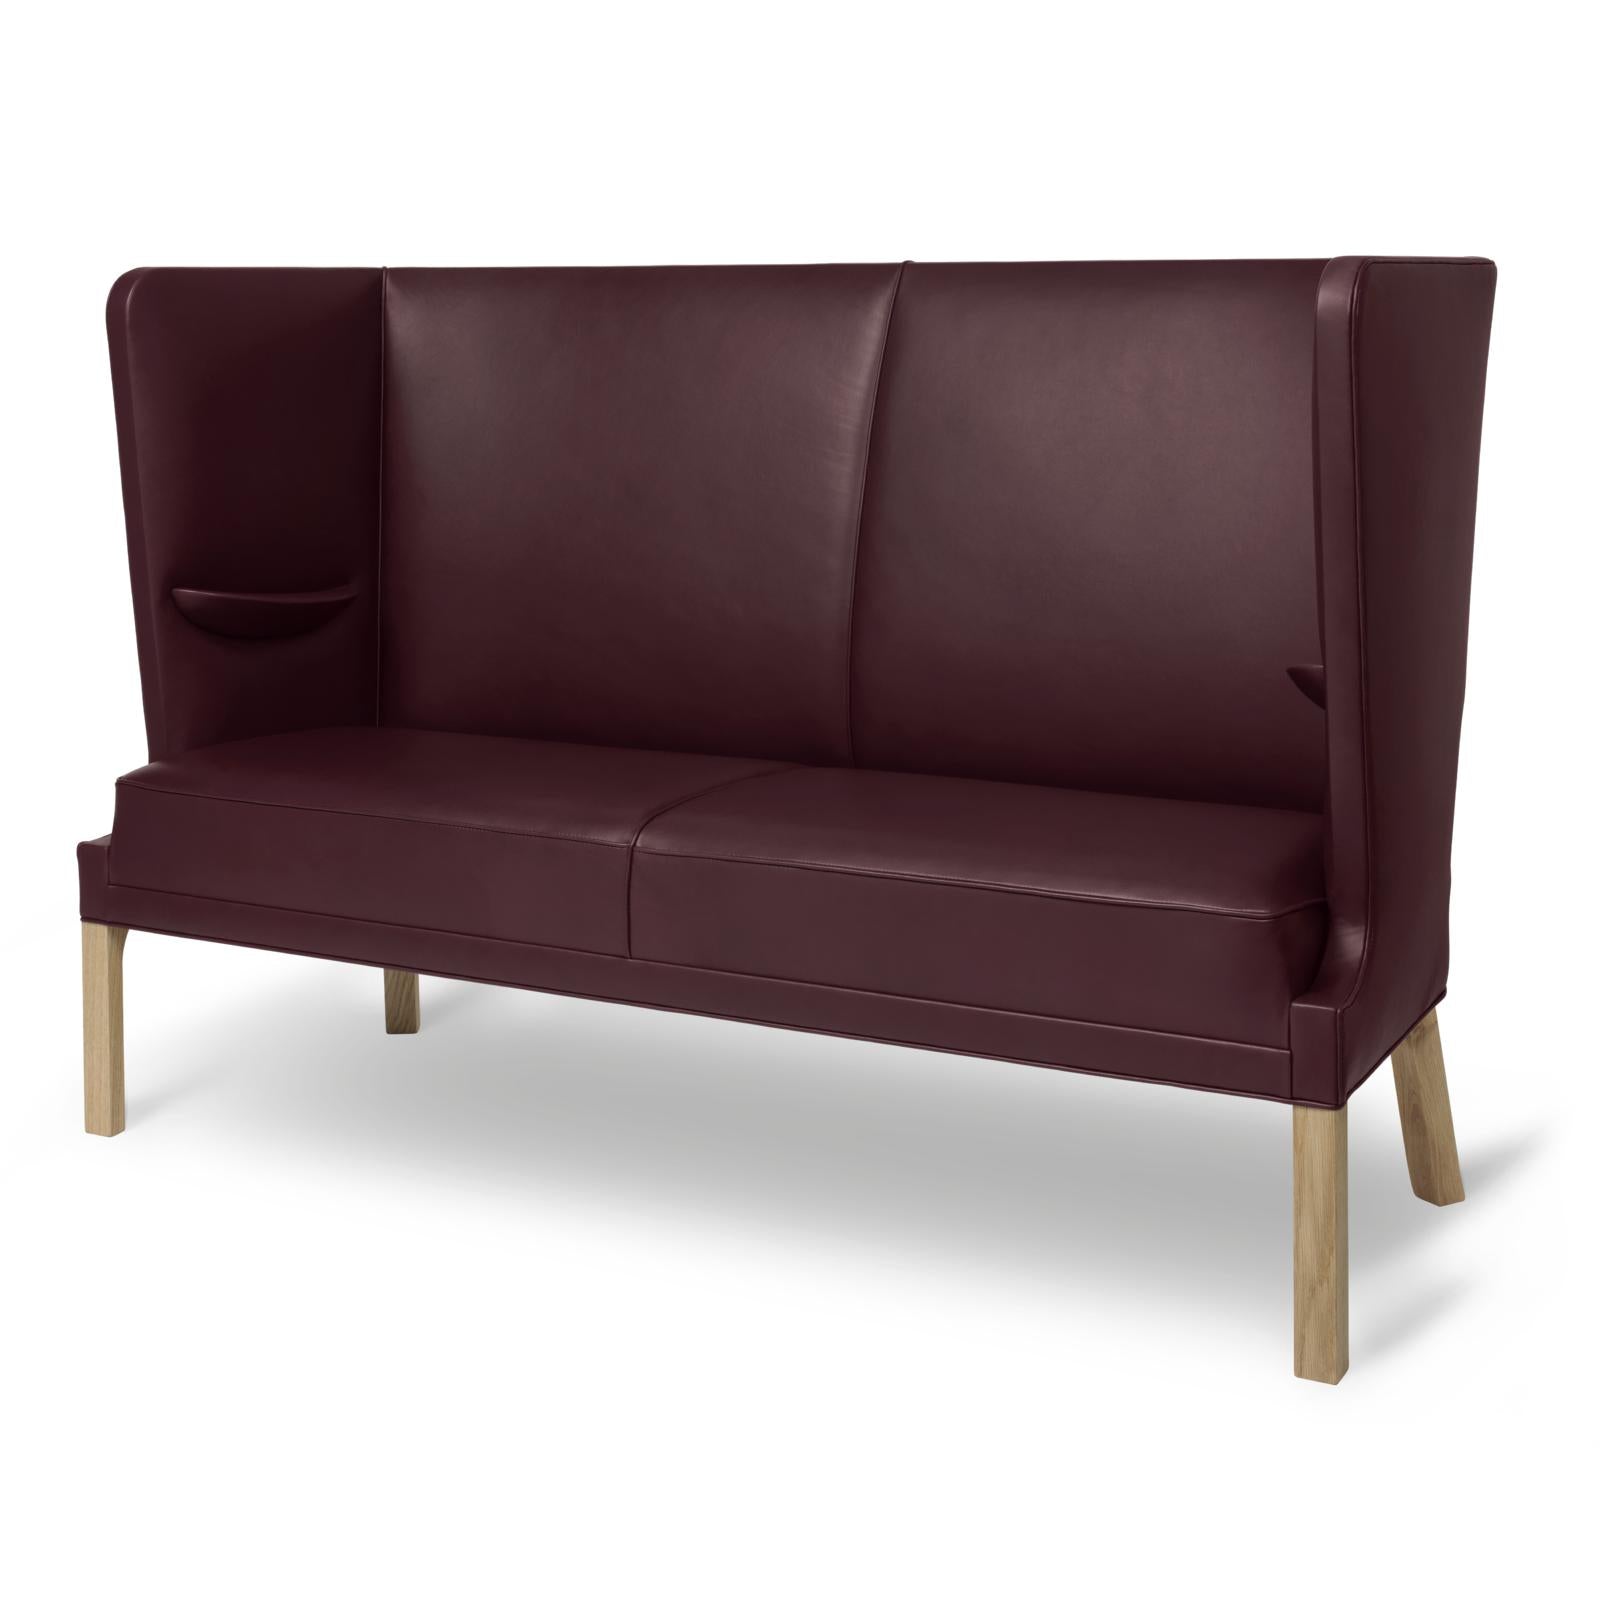 Carl Hansen FH436 Coupé divano, in pelle di quercia/bordeautica oliata